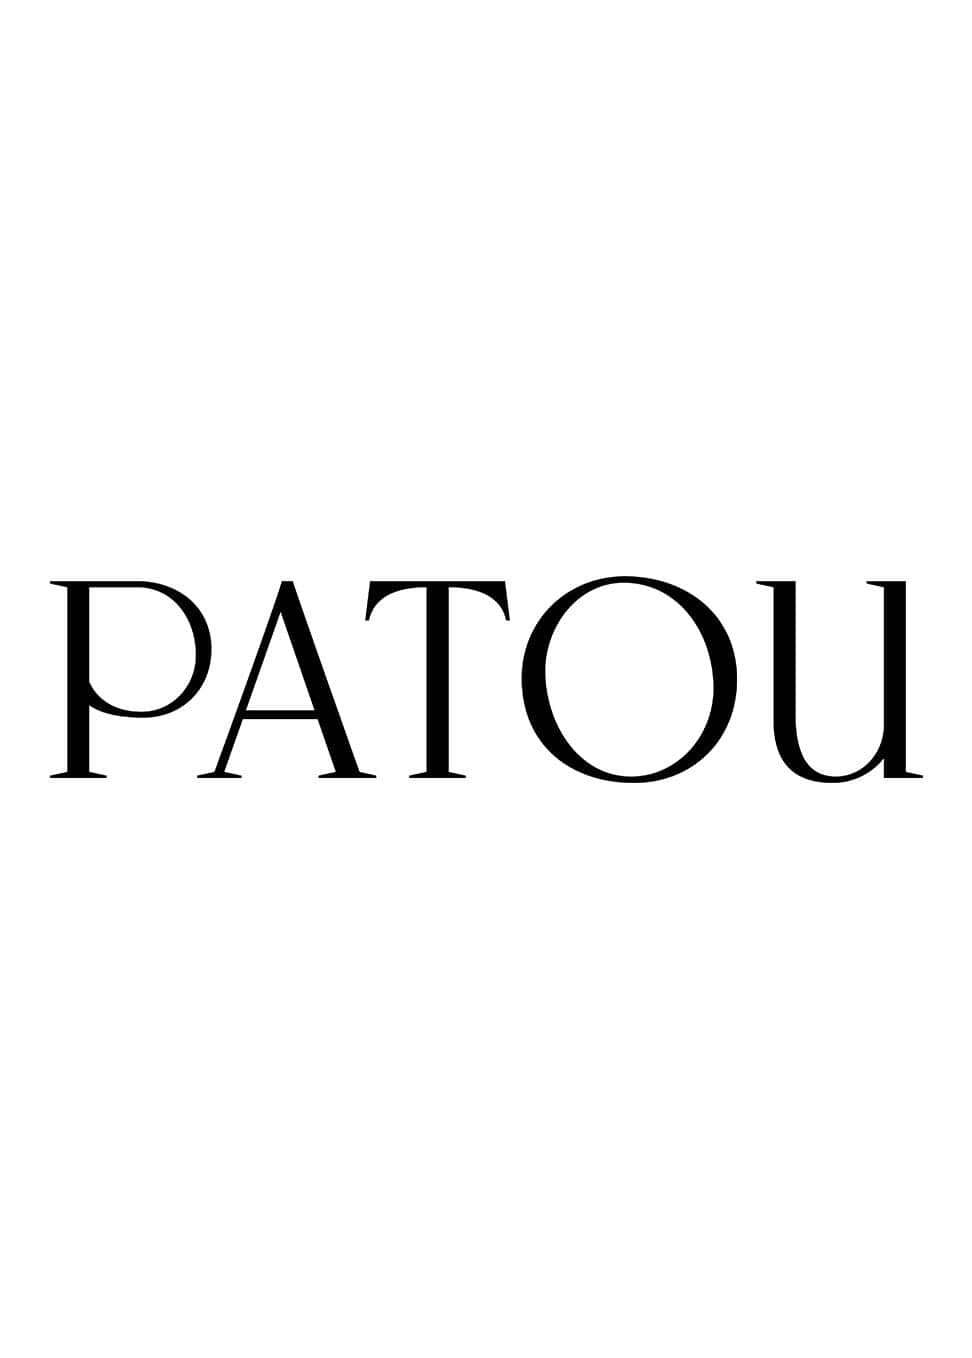 Patou Wordmark For Desktop Wallpaper